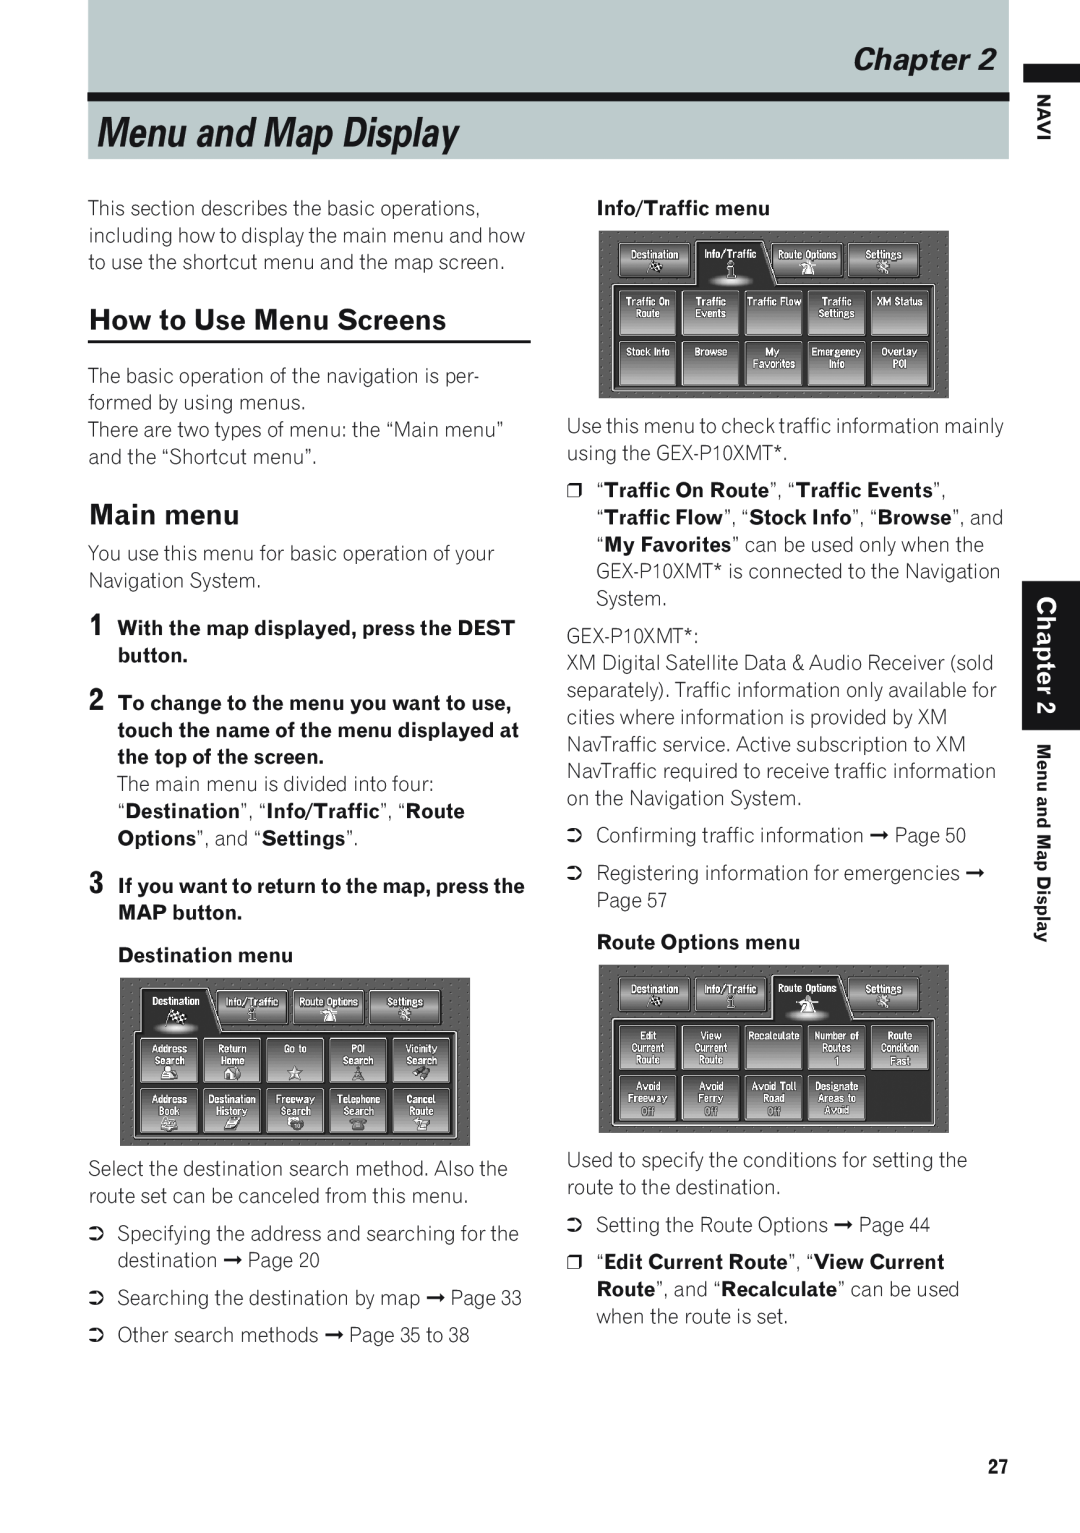 Pioneer AVIC-D1 operation manual Menu and Map Display, How to Use Menu Screens, Main menu, Chapter 